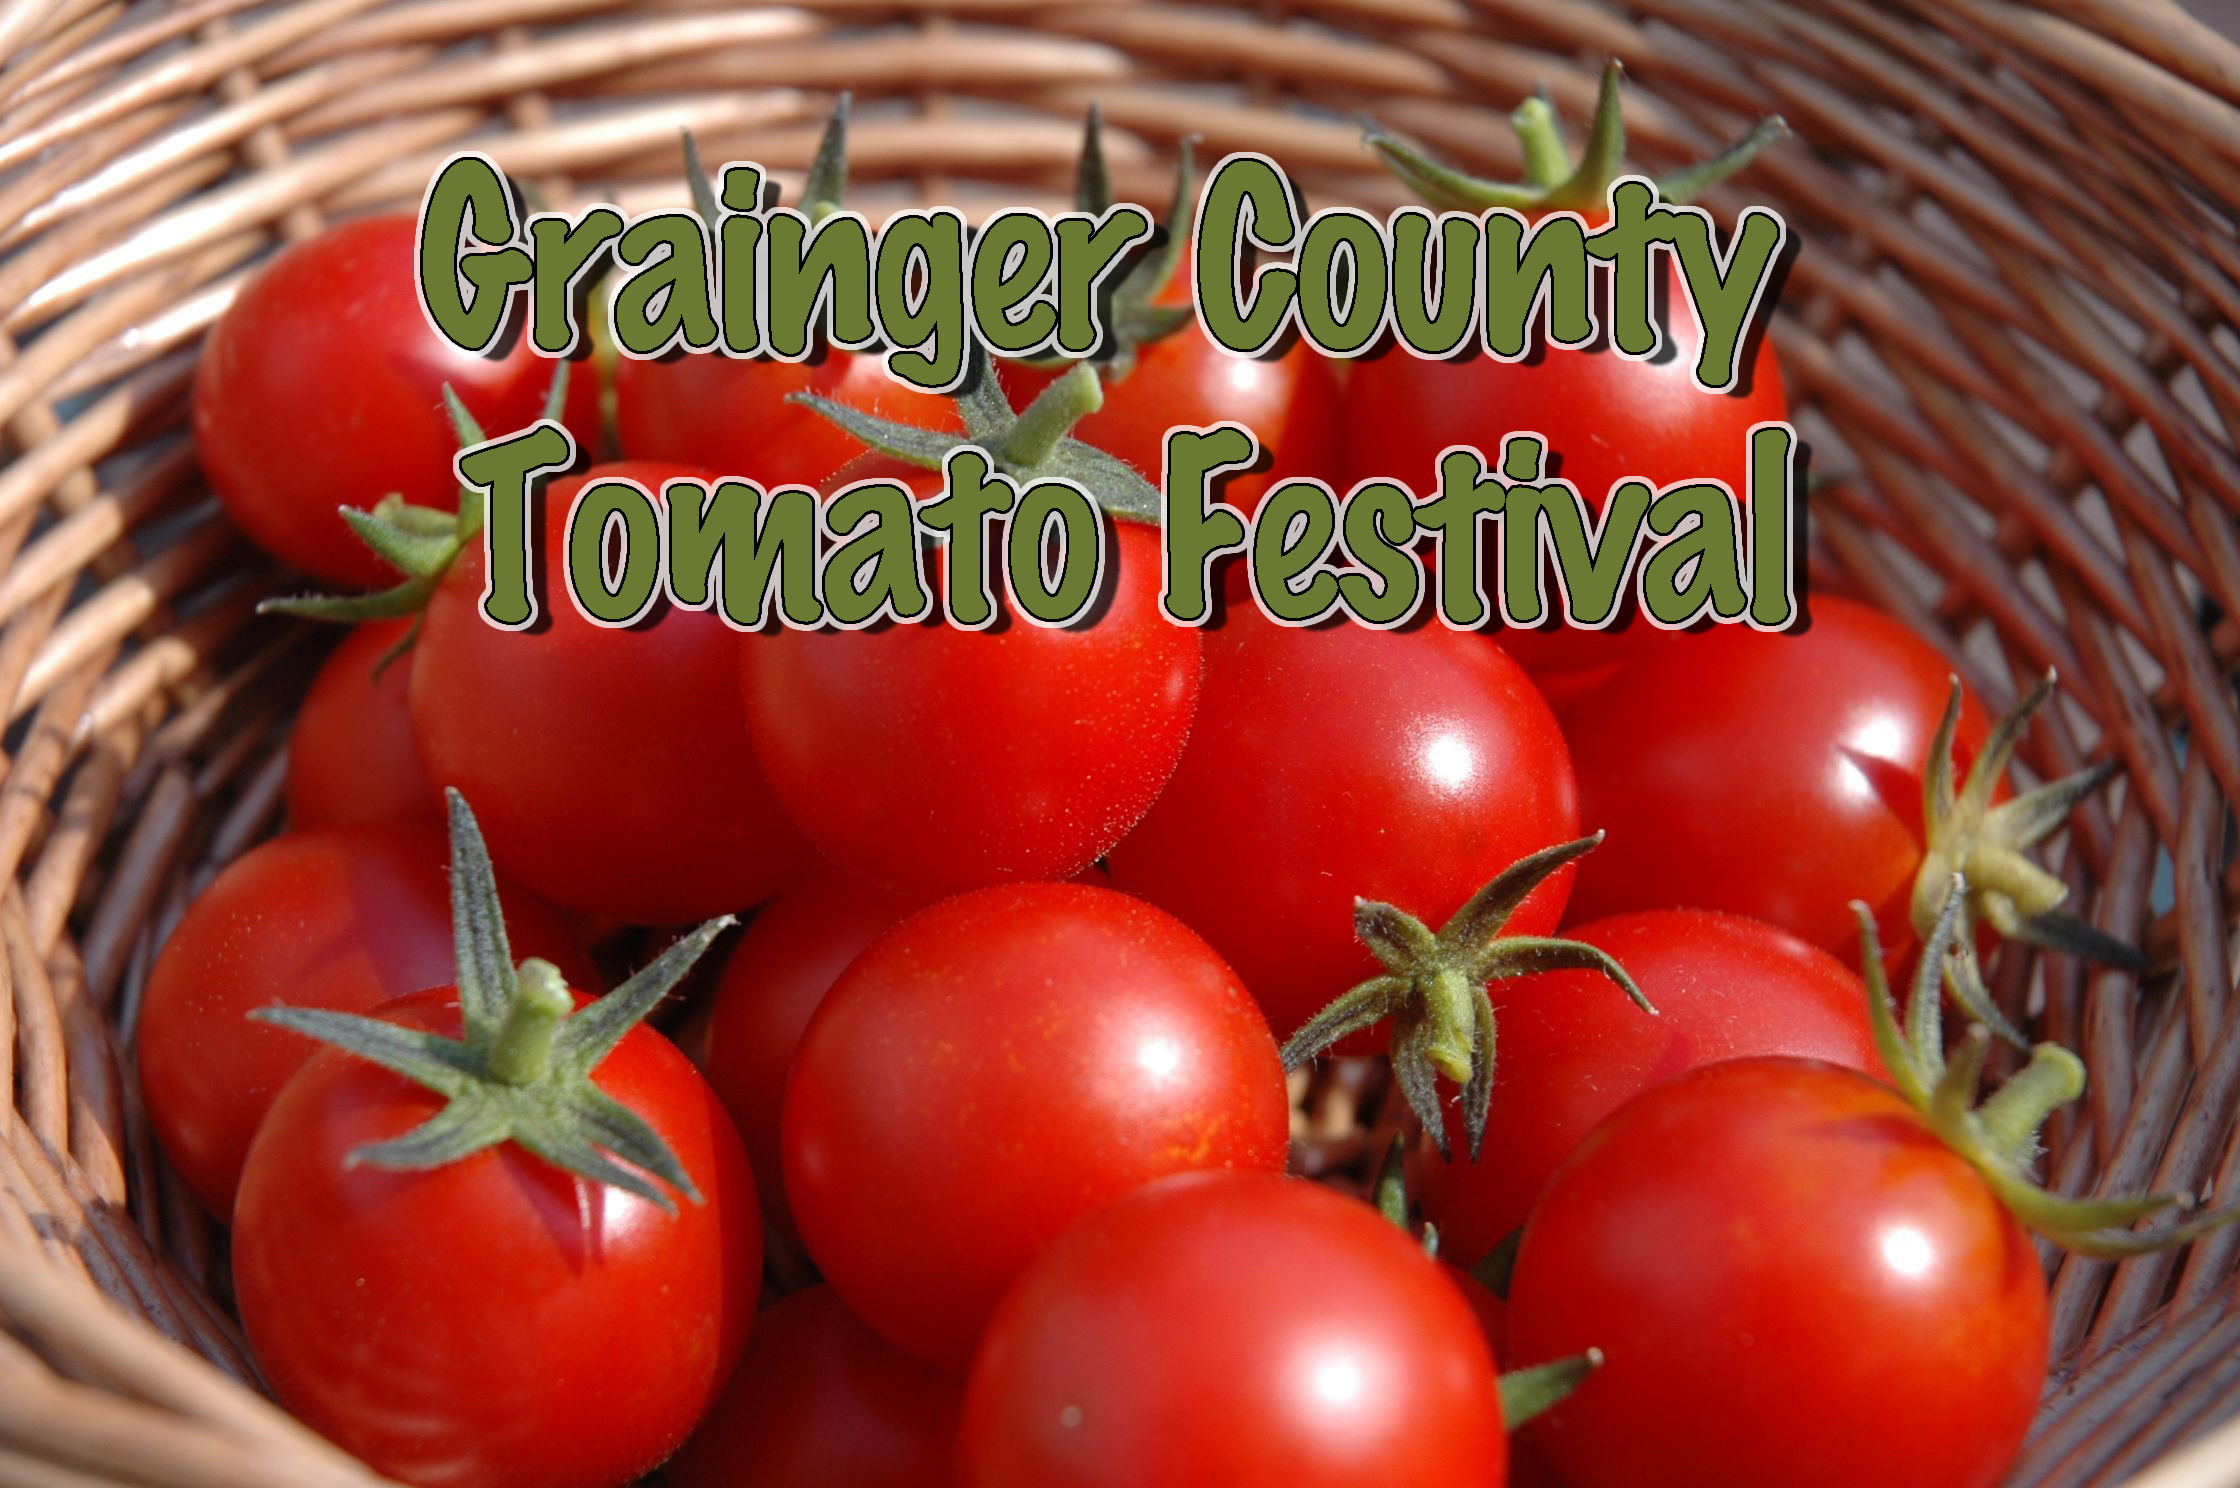 Grainger County Tomato Festival
 Grainger County Tomato Festival is going to be a delicious